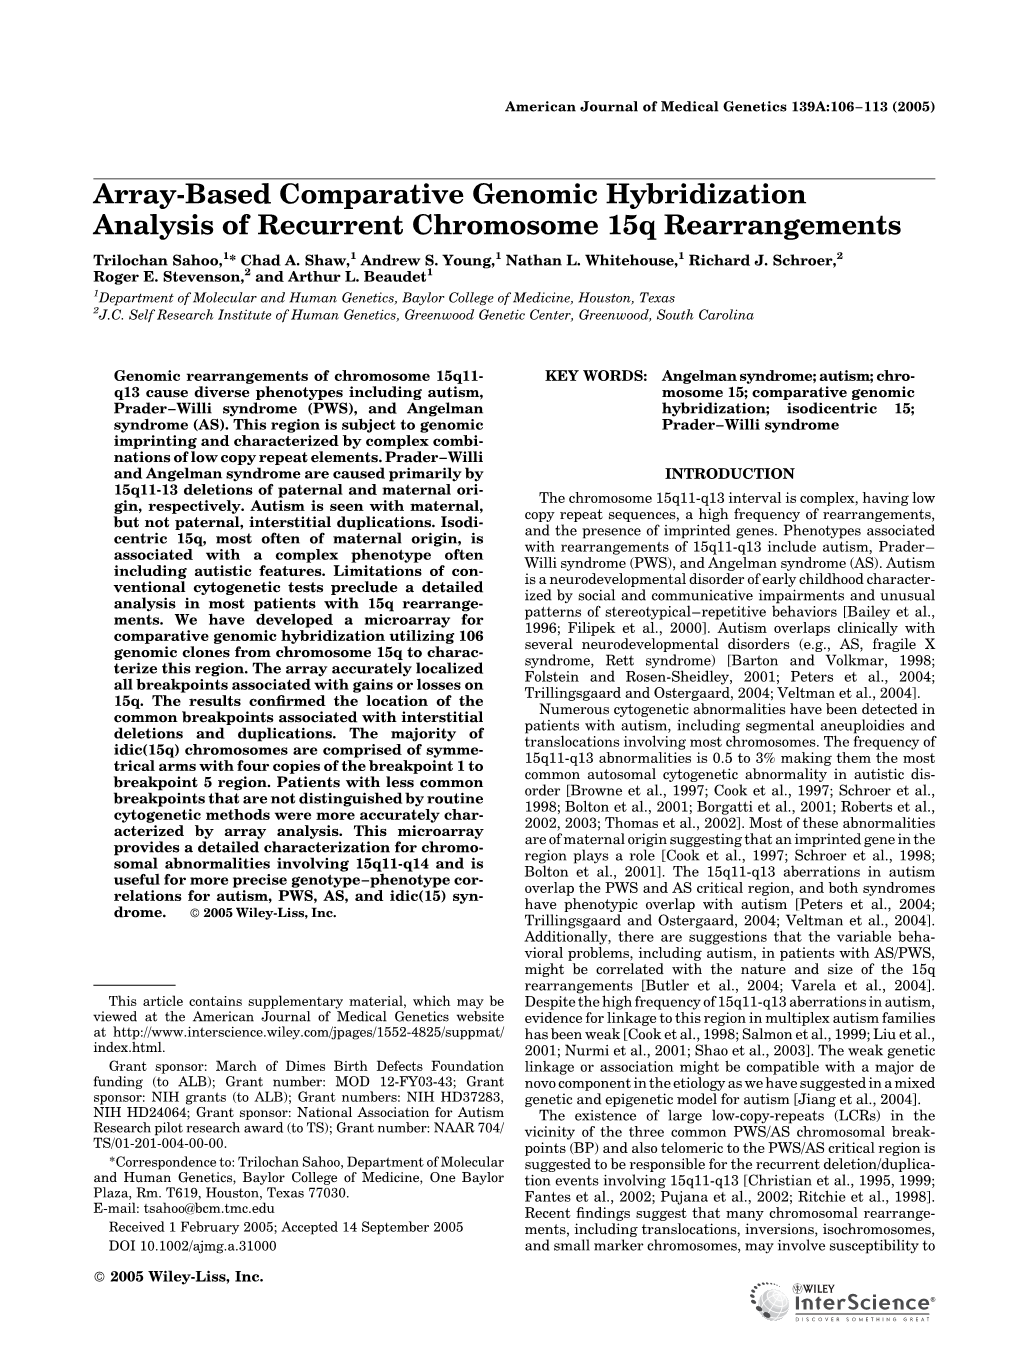 Array-Based Comparative Genomic Hybridization Analysis of Recurrent Chromosome 15Q Rearrangements Trilochan Sahoo,1* Chad A